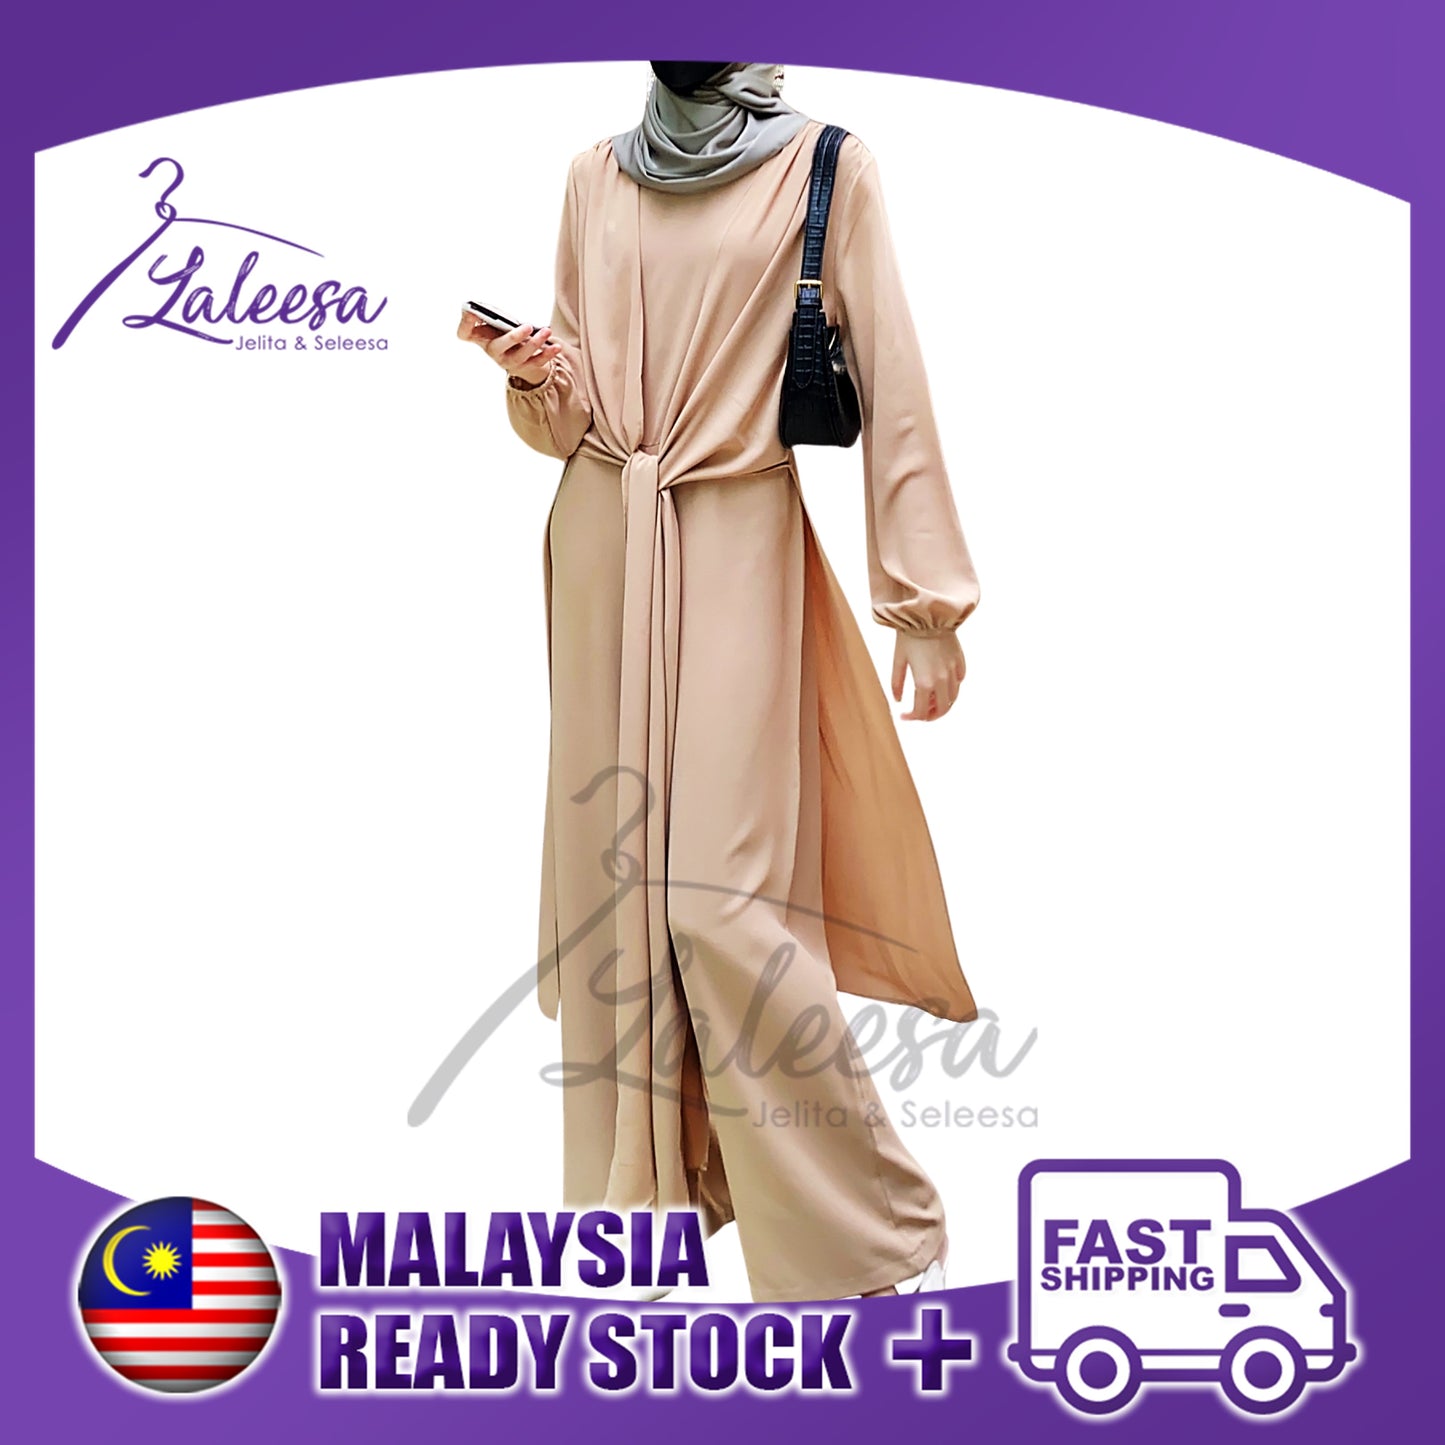 LALEESA (Jumpsuit + Cardigan) SW840820 SET FAYONA 2 Piece Belted Jumpsuit Dress Muslimah Dress Baju Muslimah